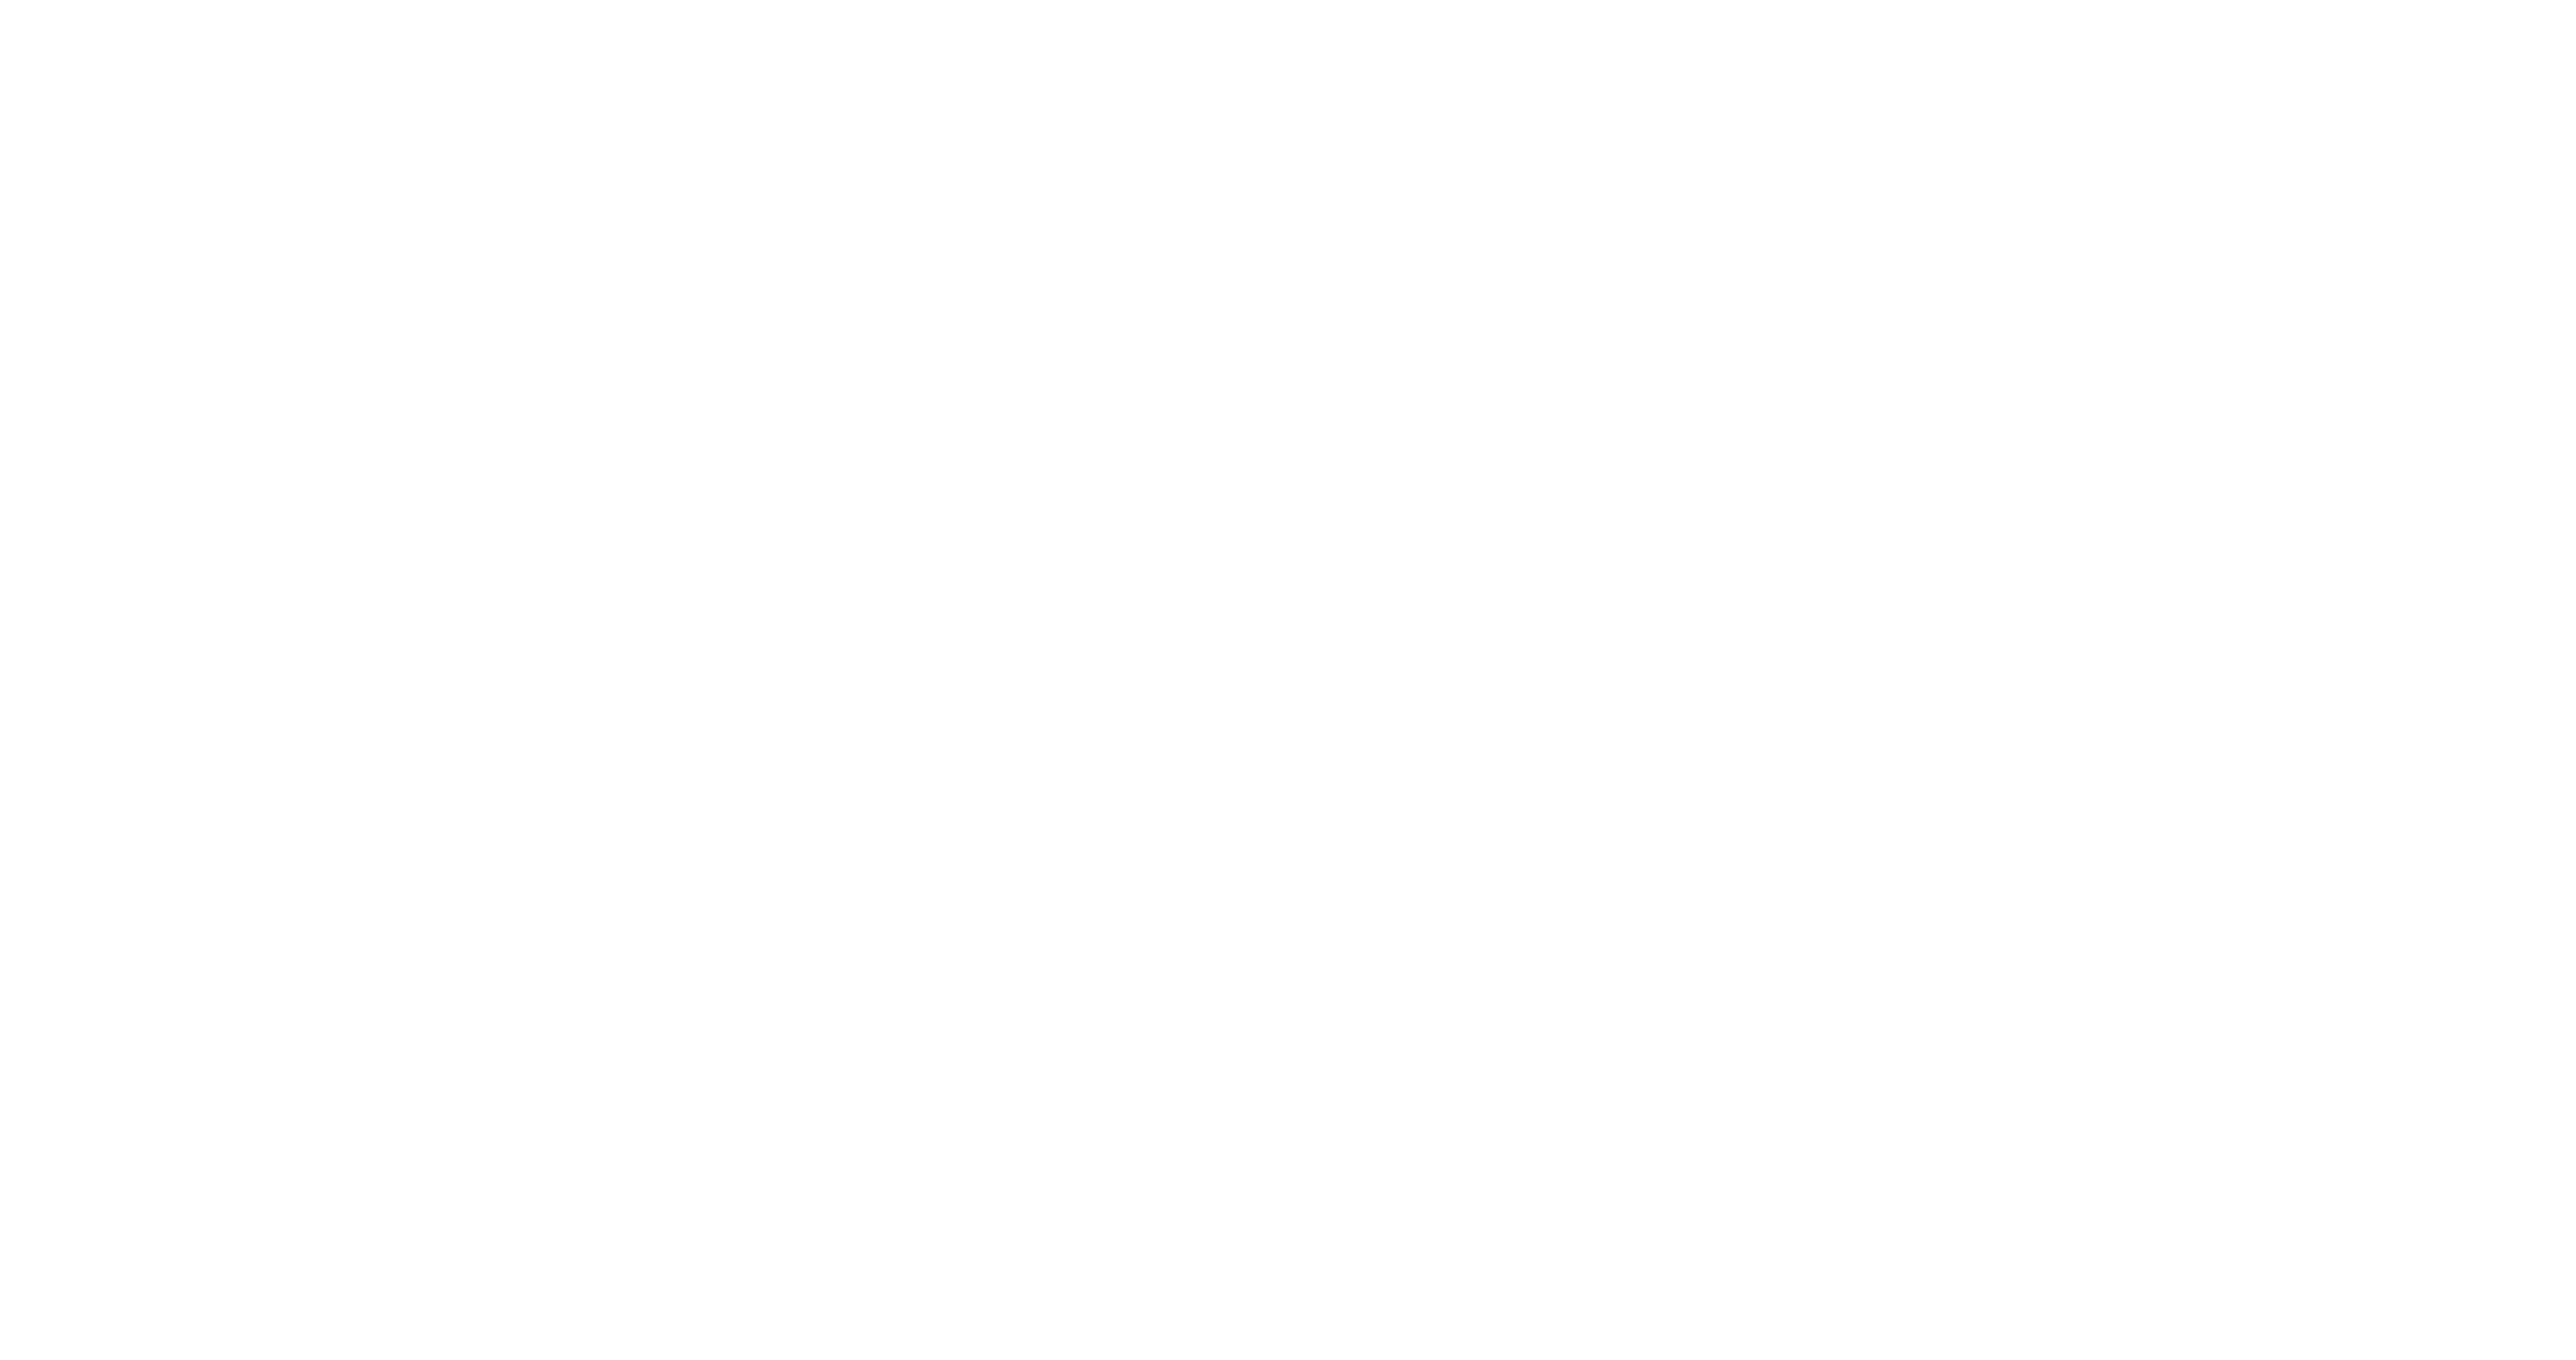 OVVO logo